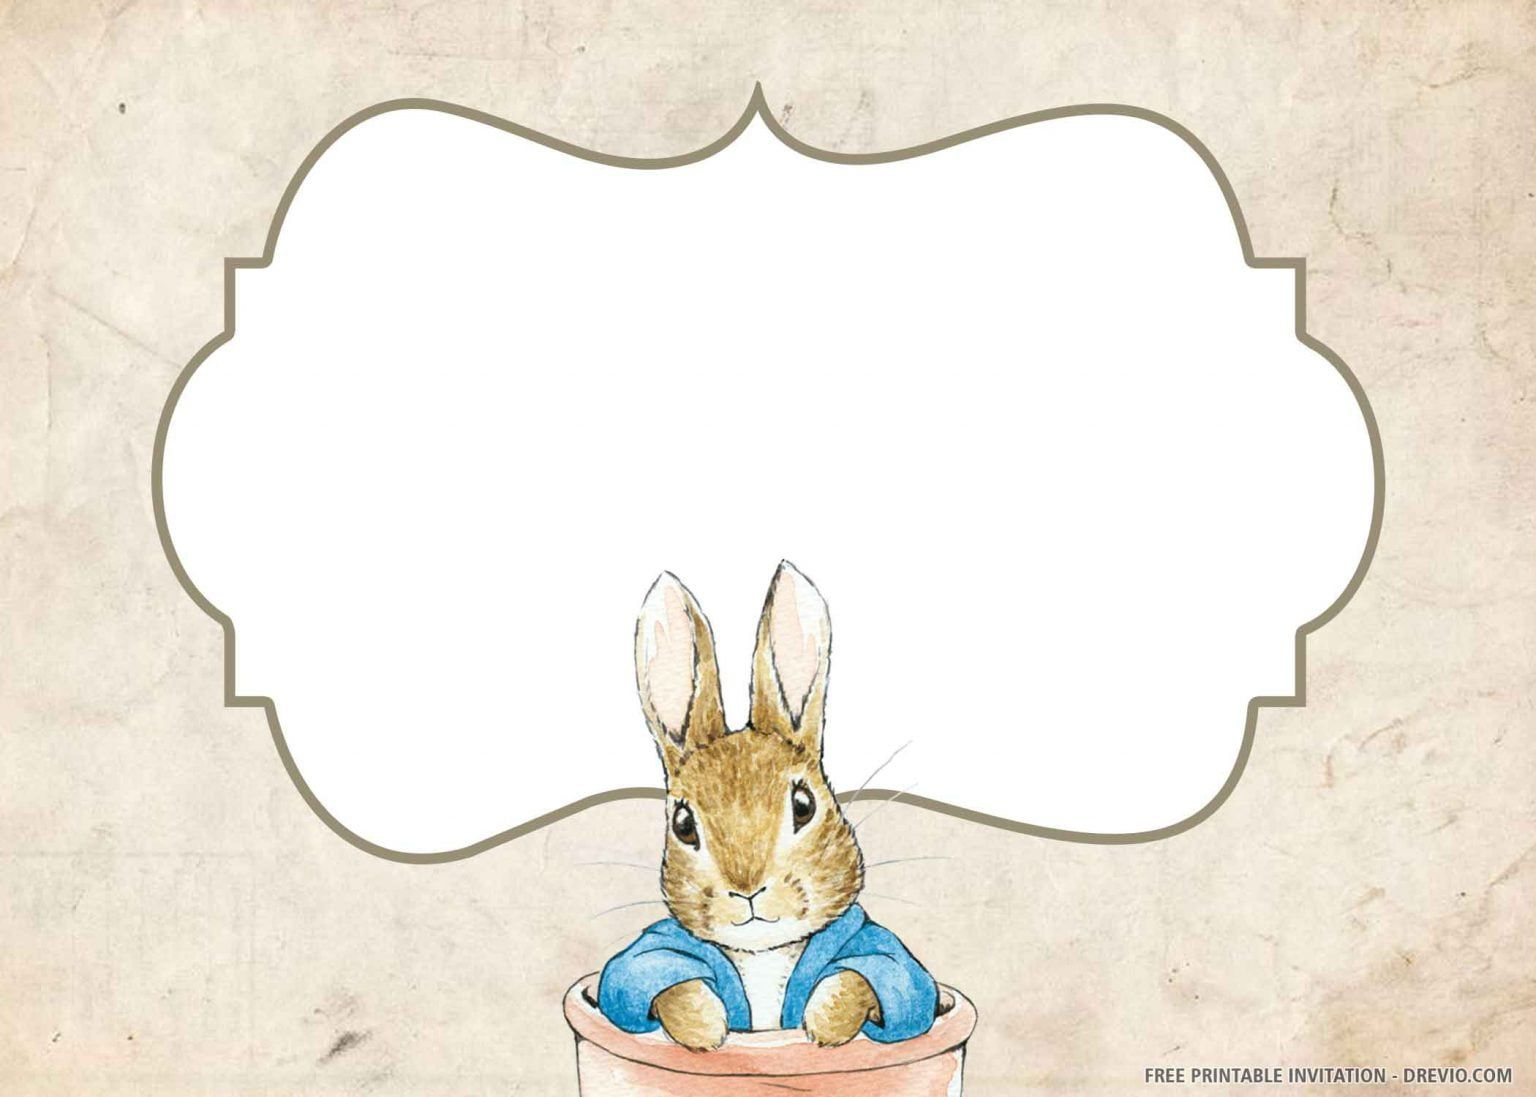 Free Printable) – Peter Rabbit Birthday Invitation Templates - Free Printable Peter Rabbit Images